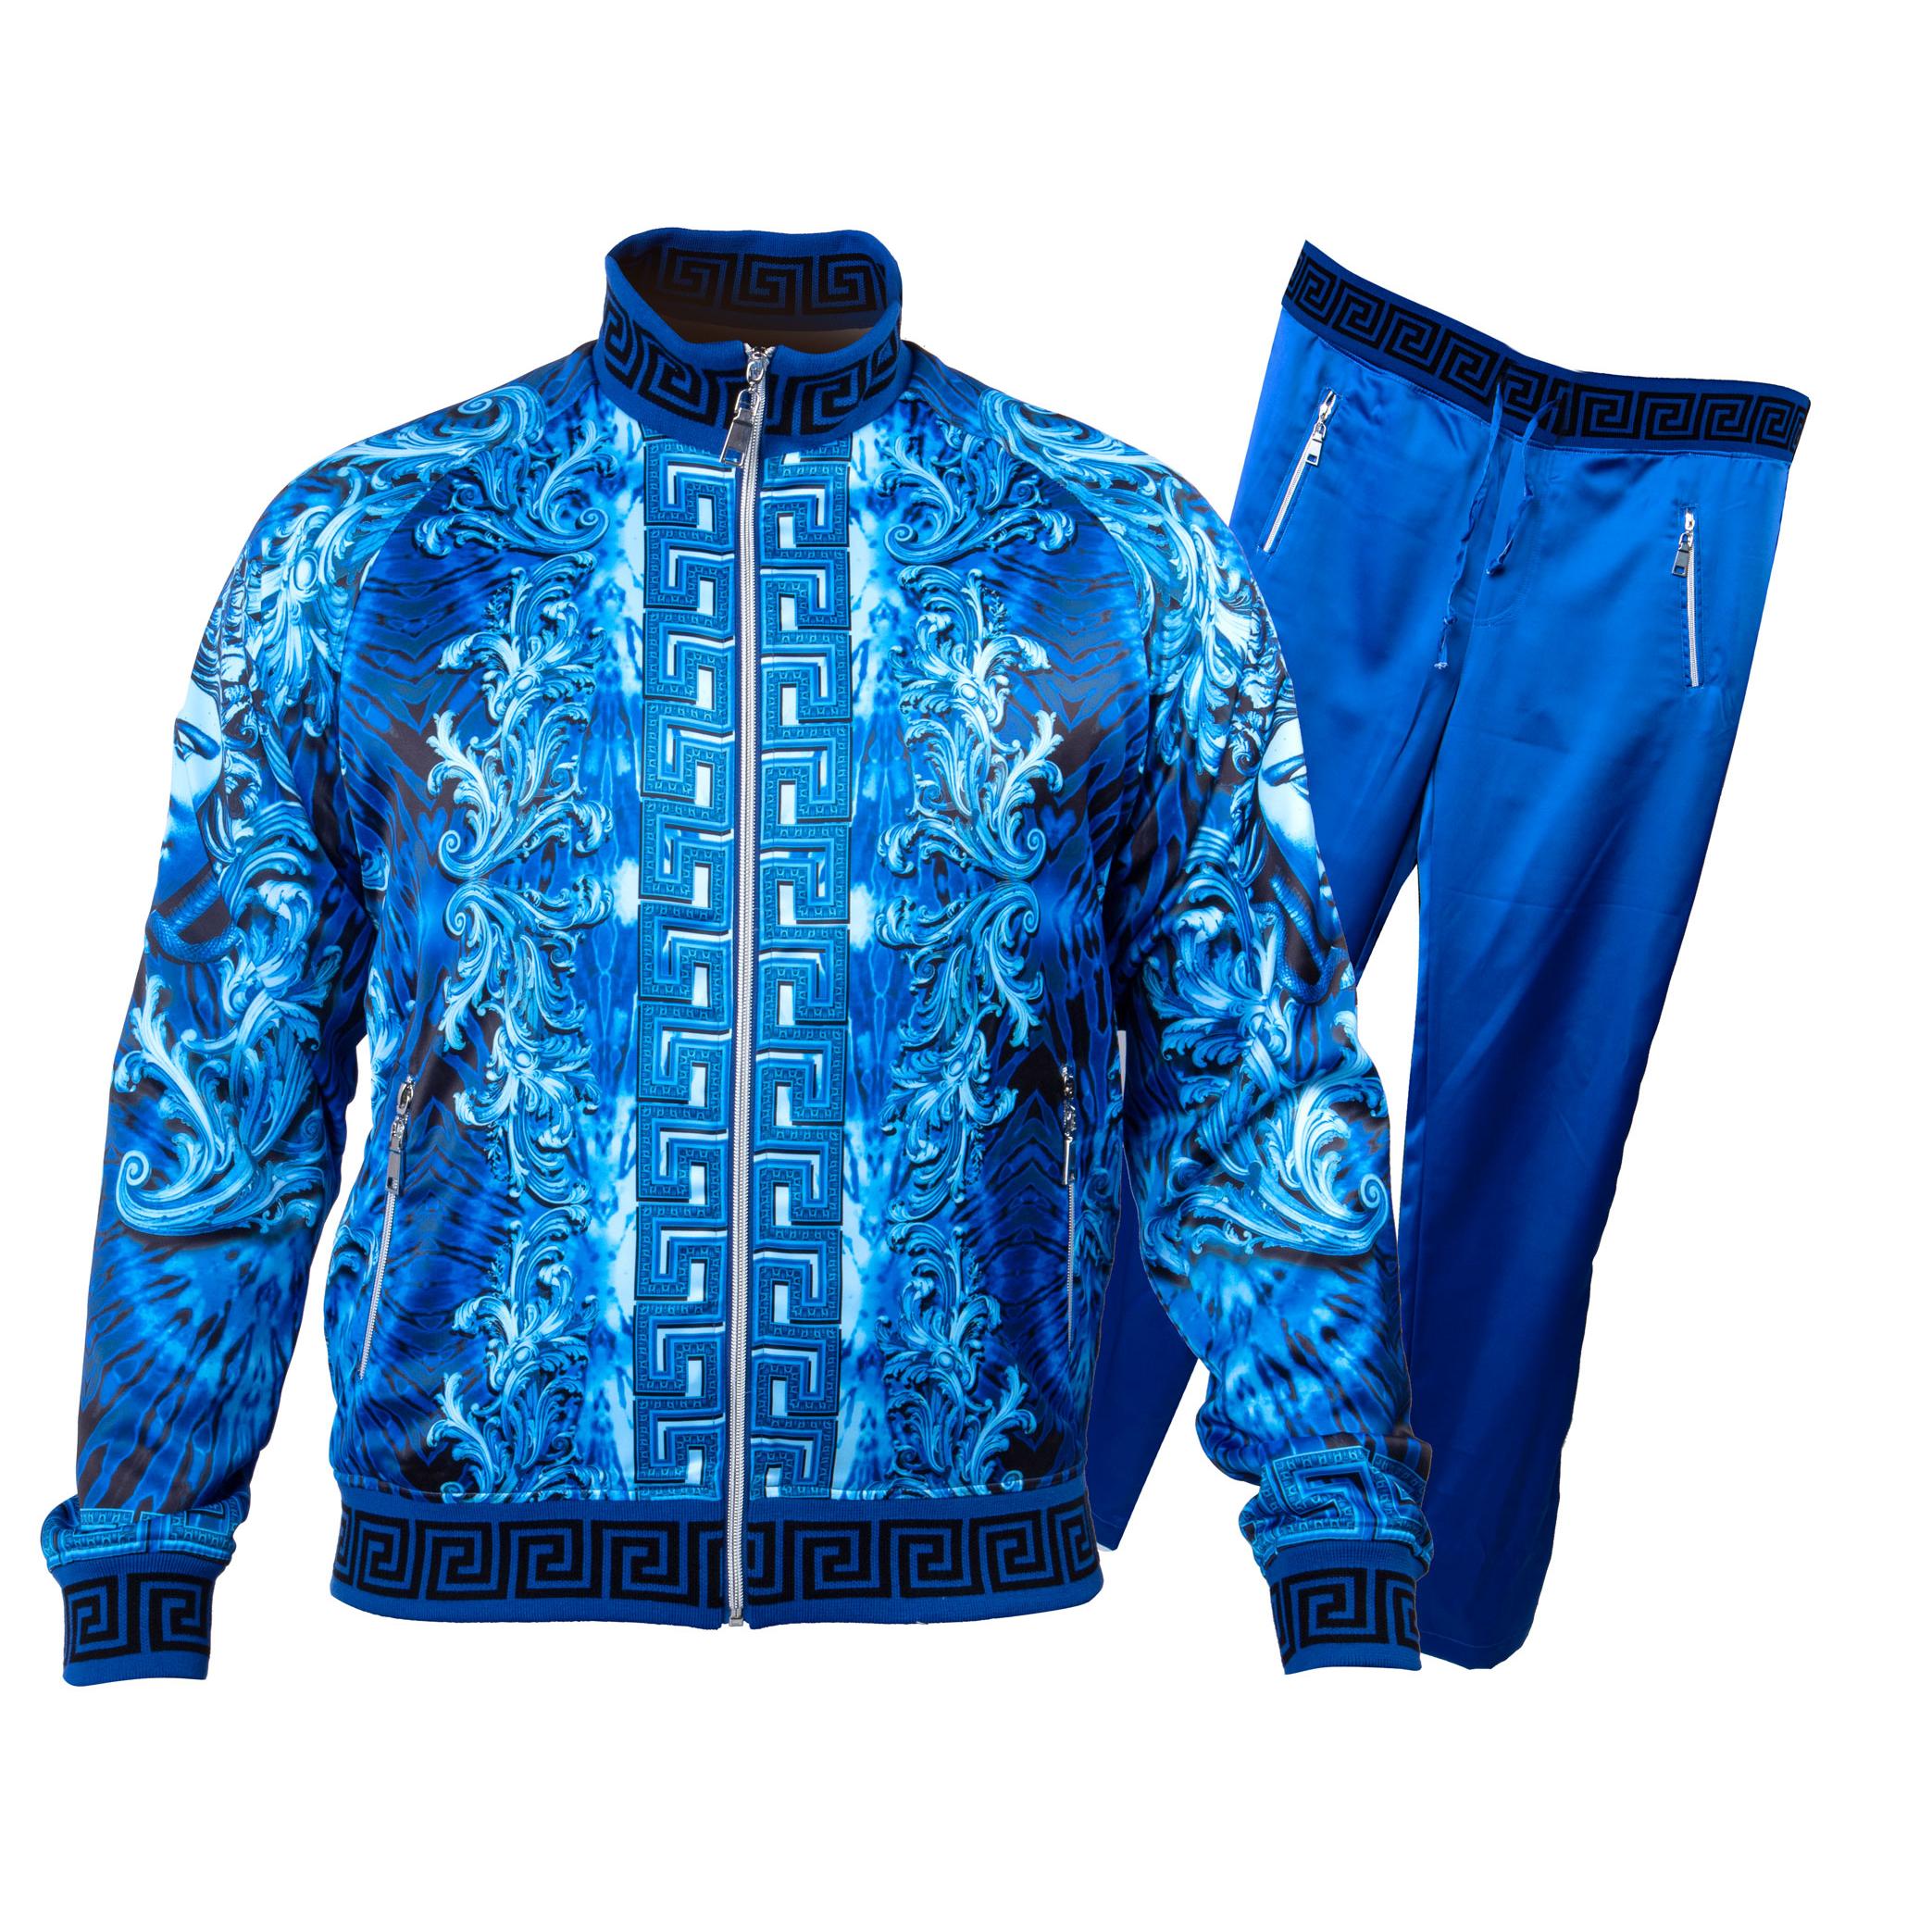 Prestige Royal Blue Satin Medusa Greek Design Tracksuit Outfit Jgs Upscale